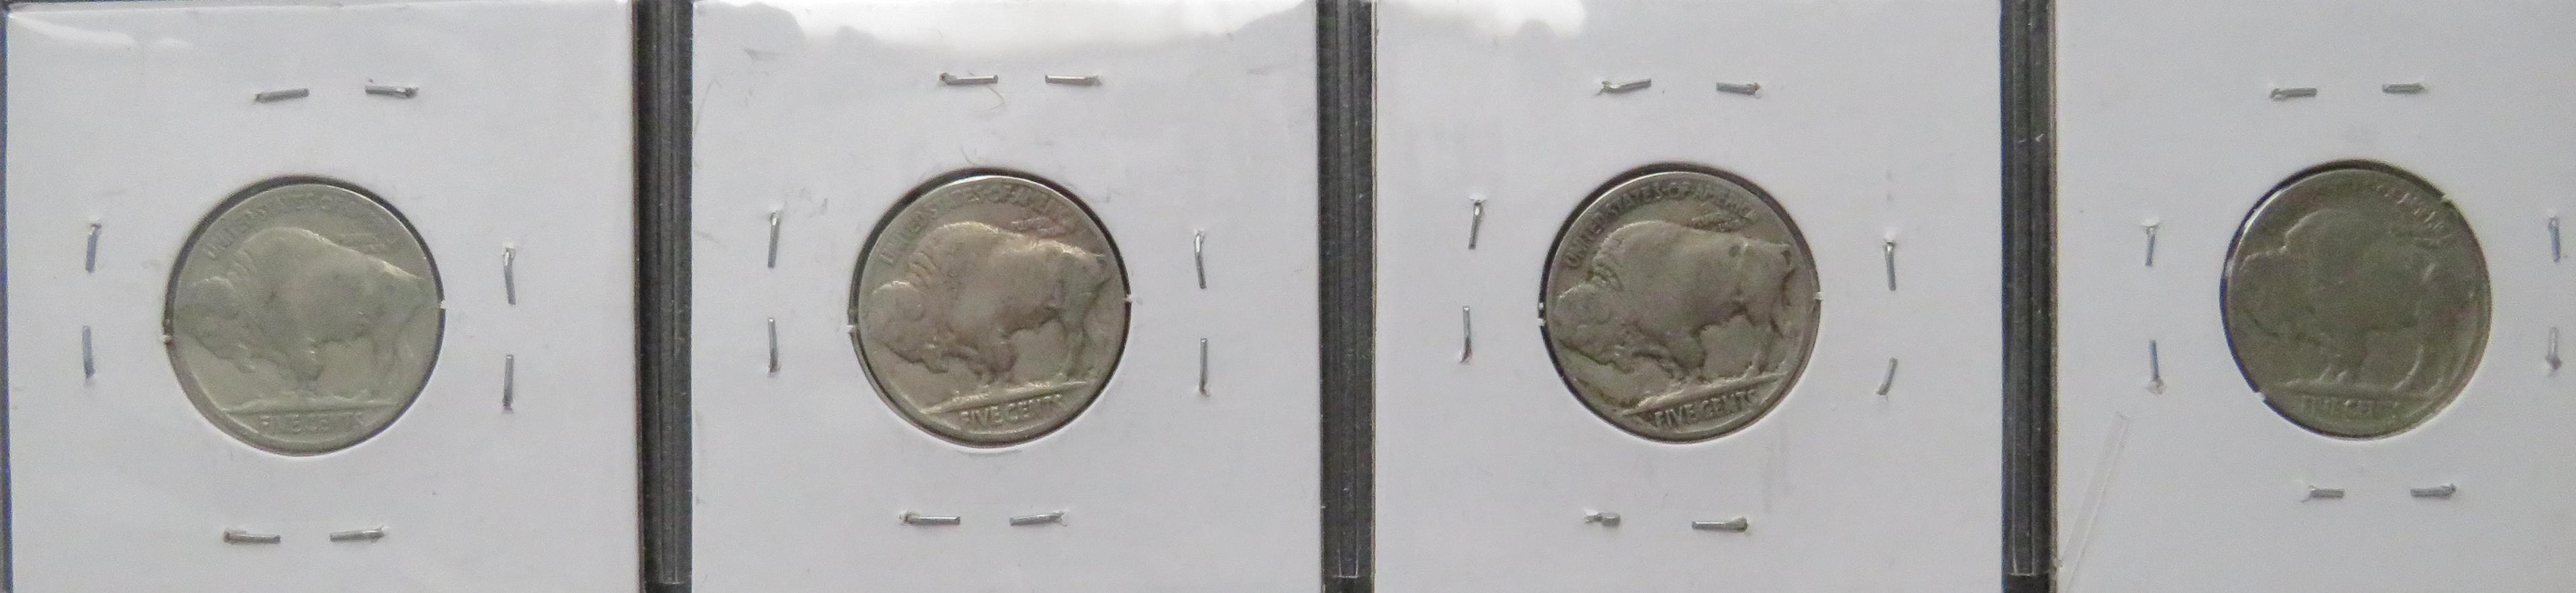 1936-P (4) Buffalo Nickels